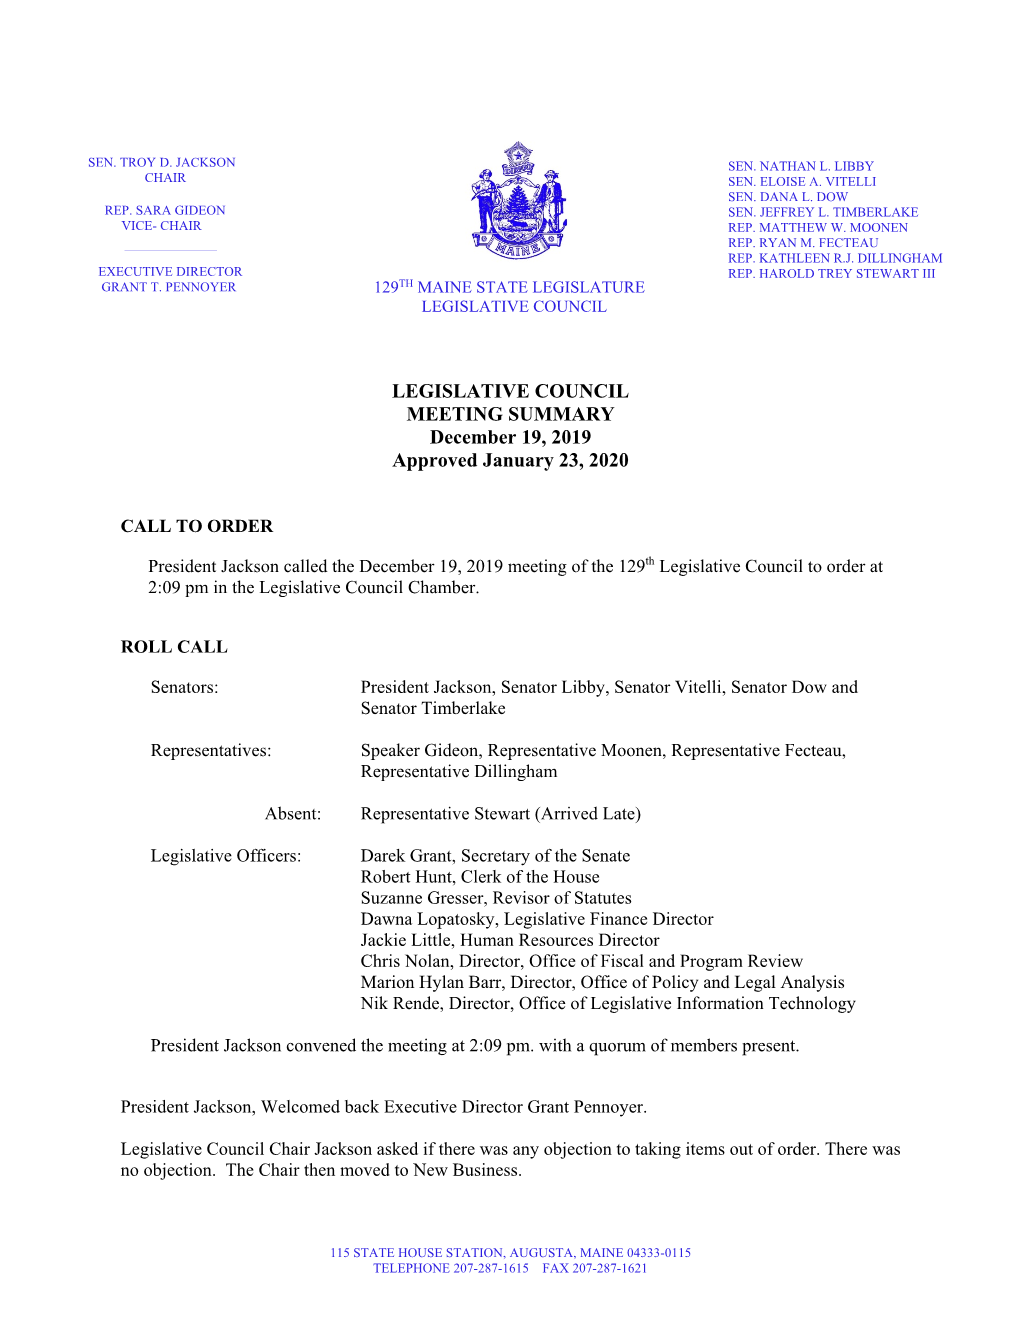 Legislative Council Meeting Summary 12-19-19